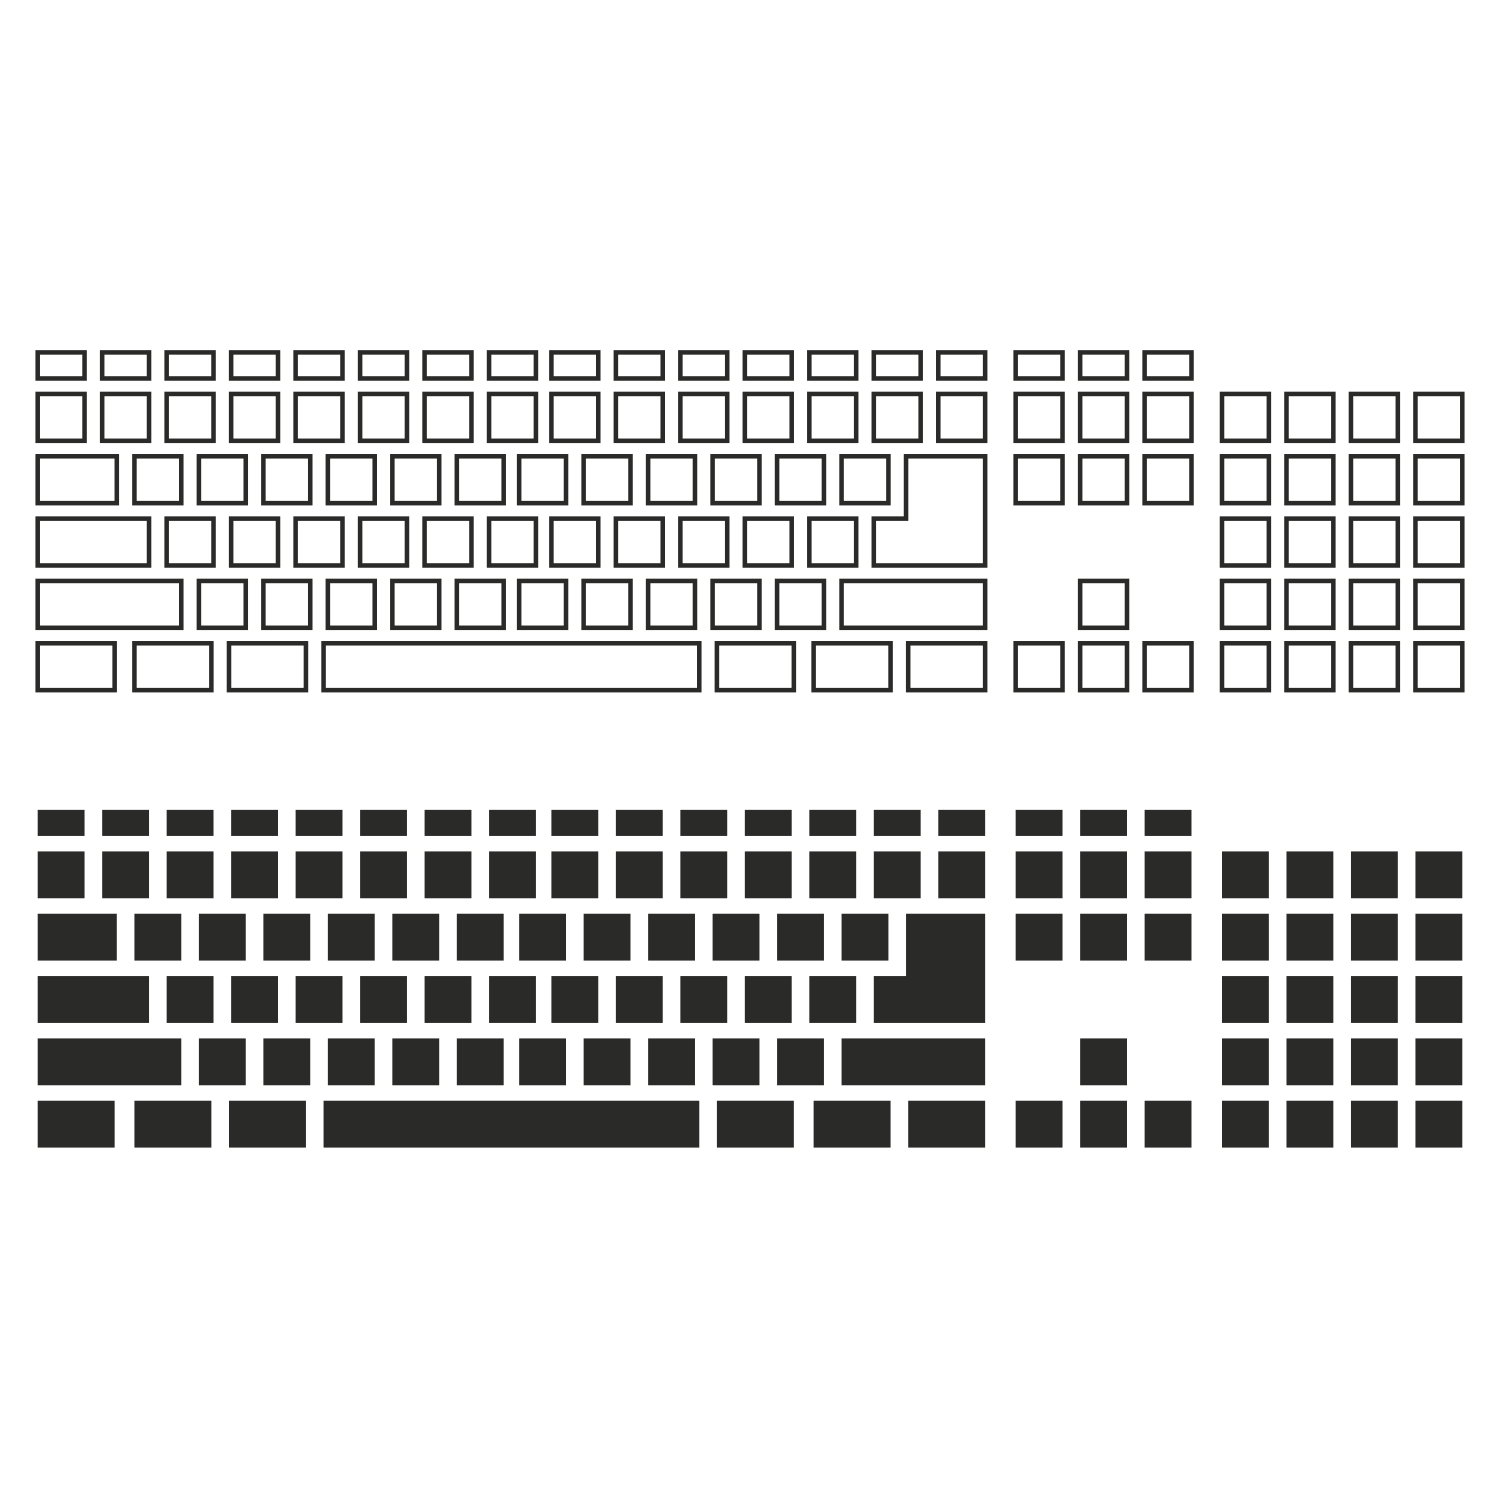 computer keyboard clipart eps - photo #38